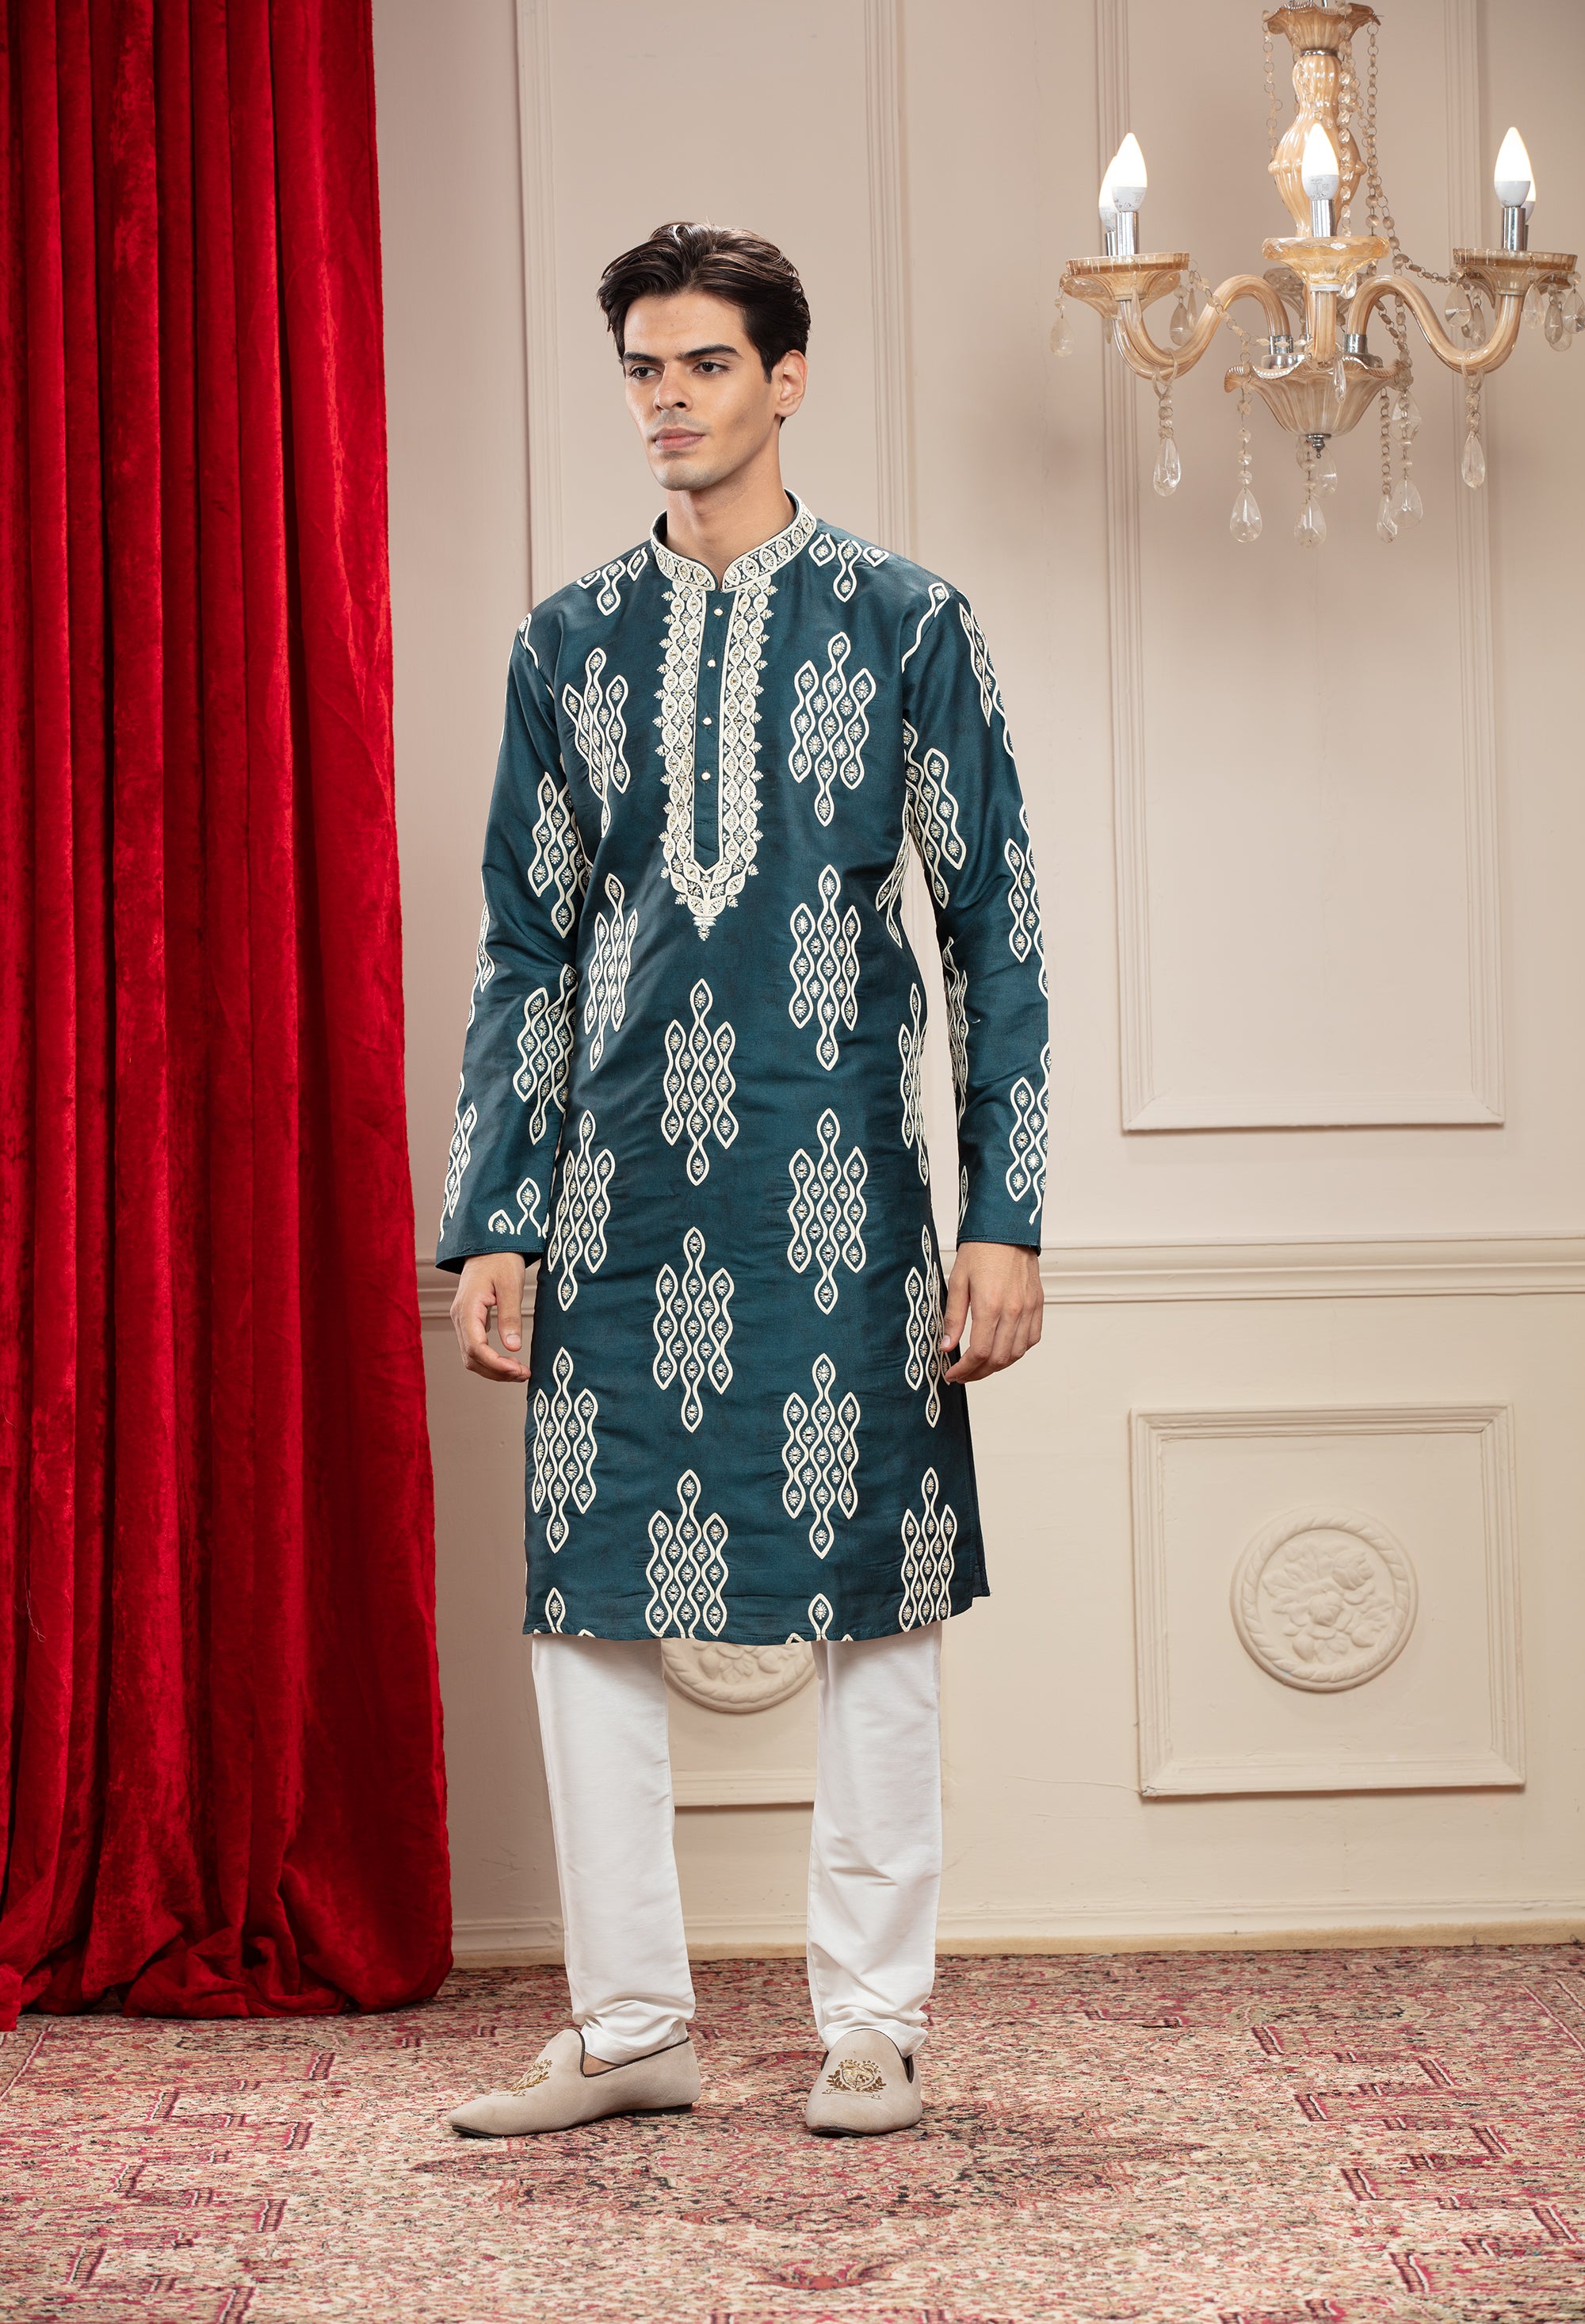 Pine Green Banarasi Silk kurta pajama set with cutdana and resham work